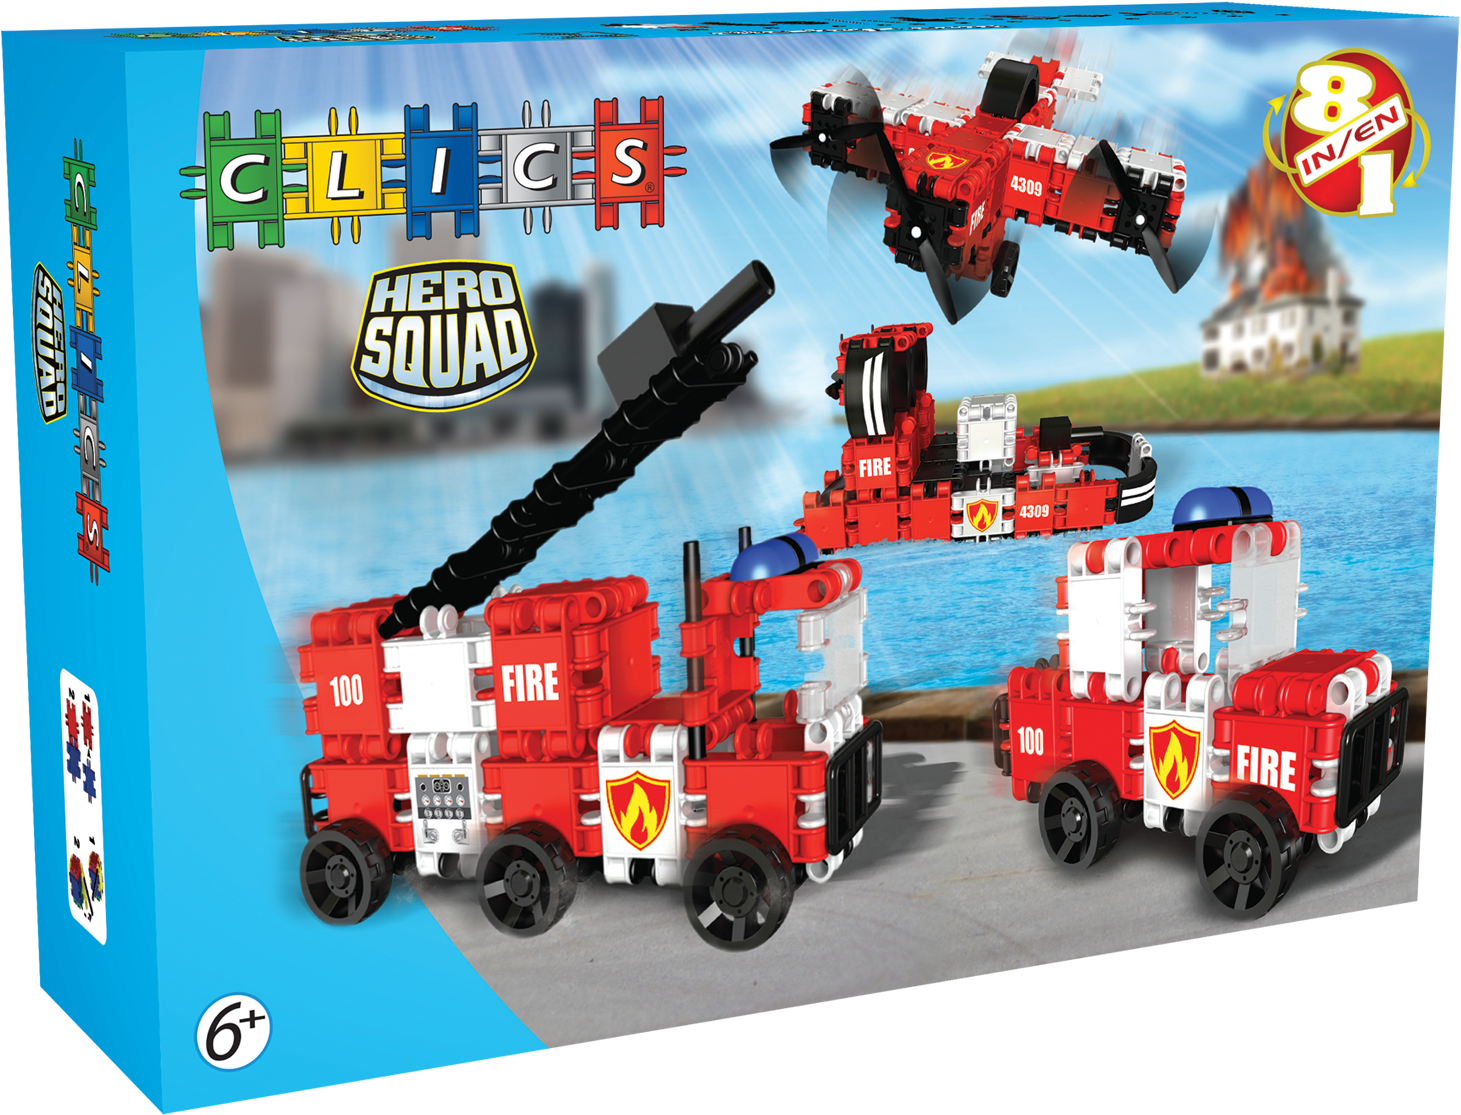 There's A Fire In A Big Block Of Flats Quick, Sound - Clics Hero Squad Fire Brigade Box (1500x1215), Png Download